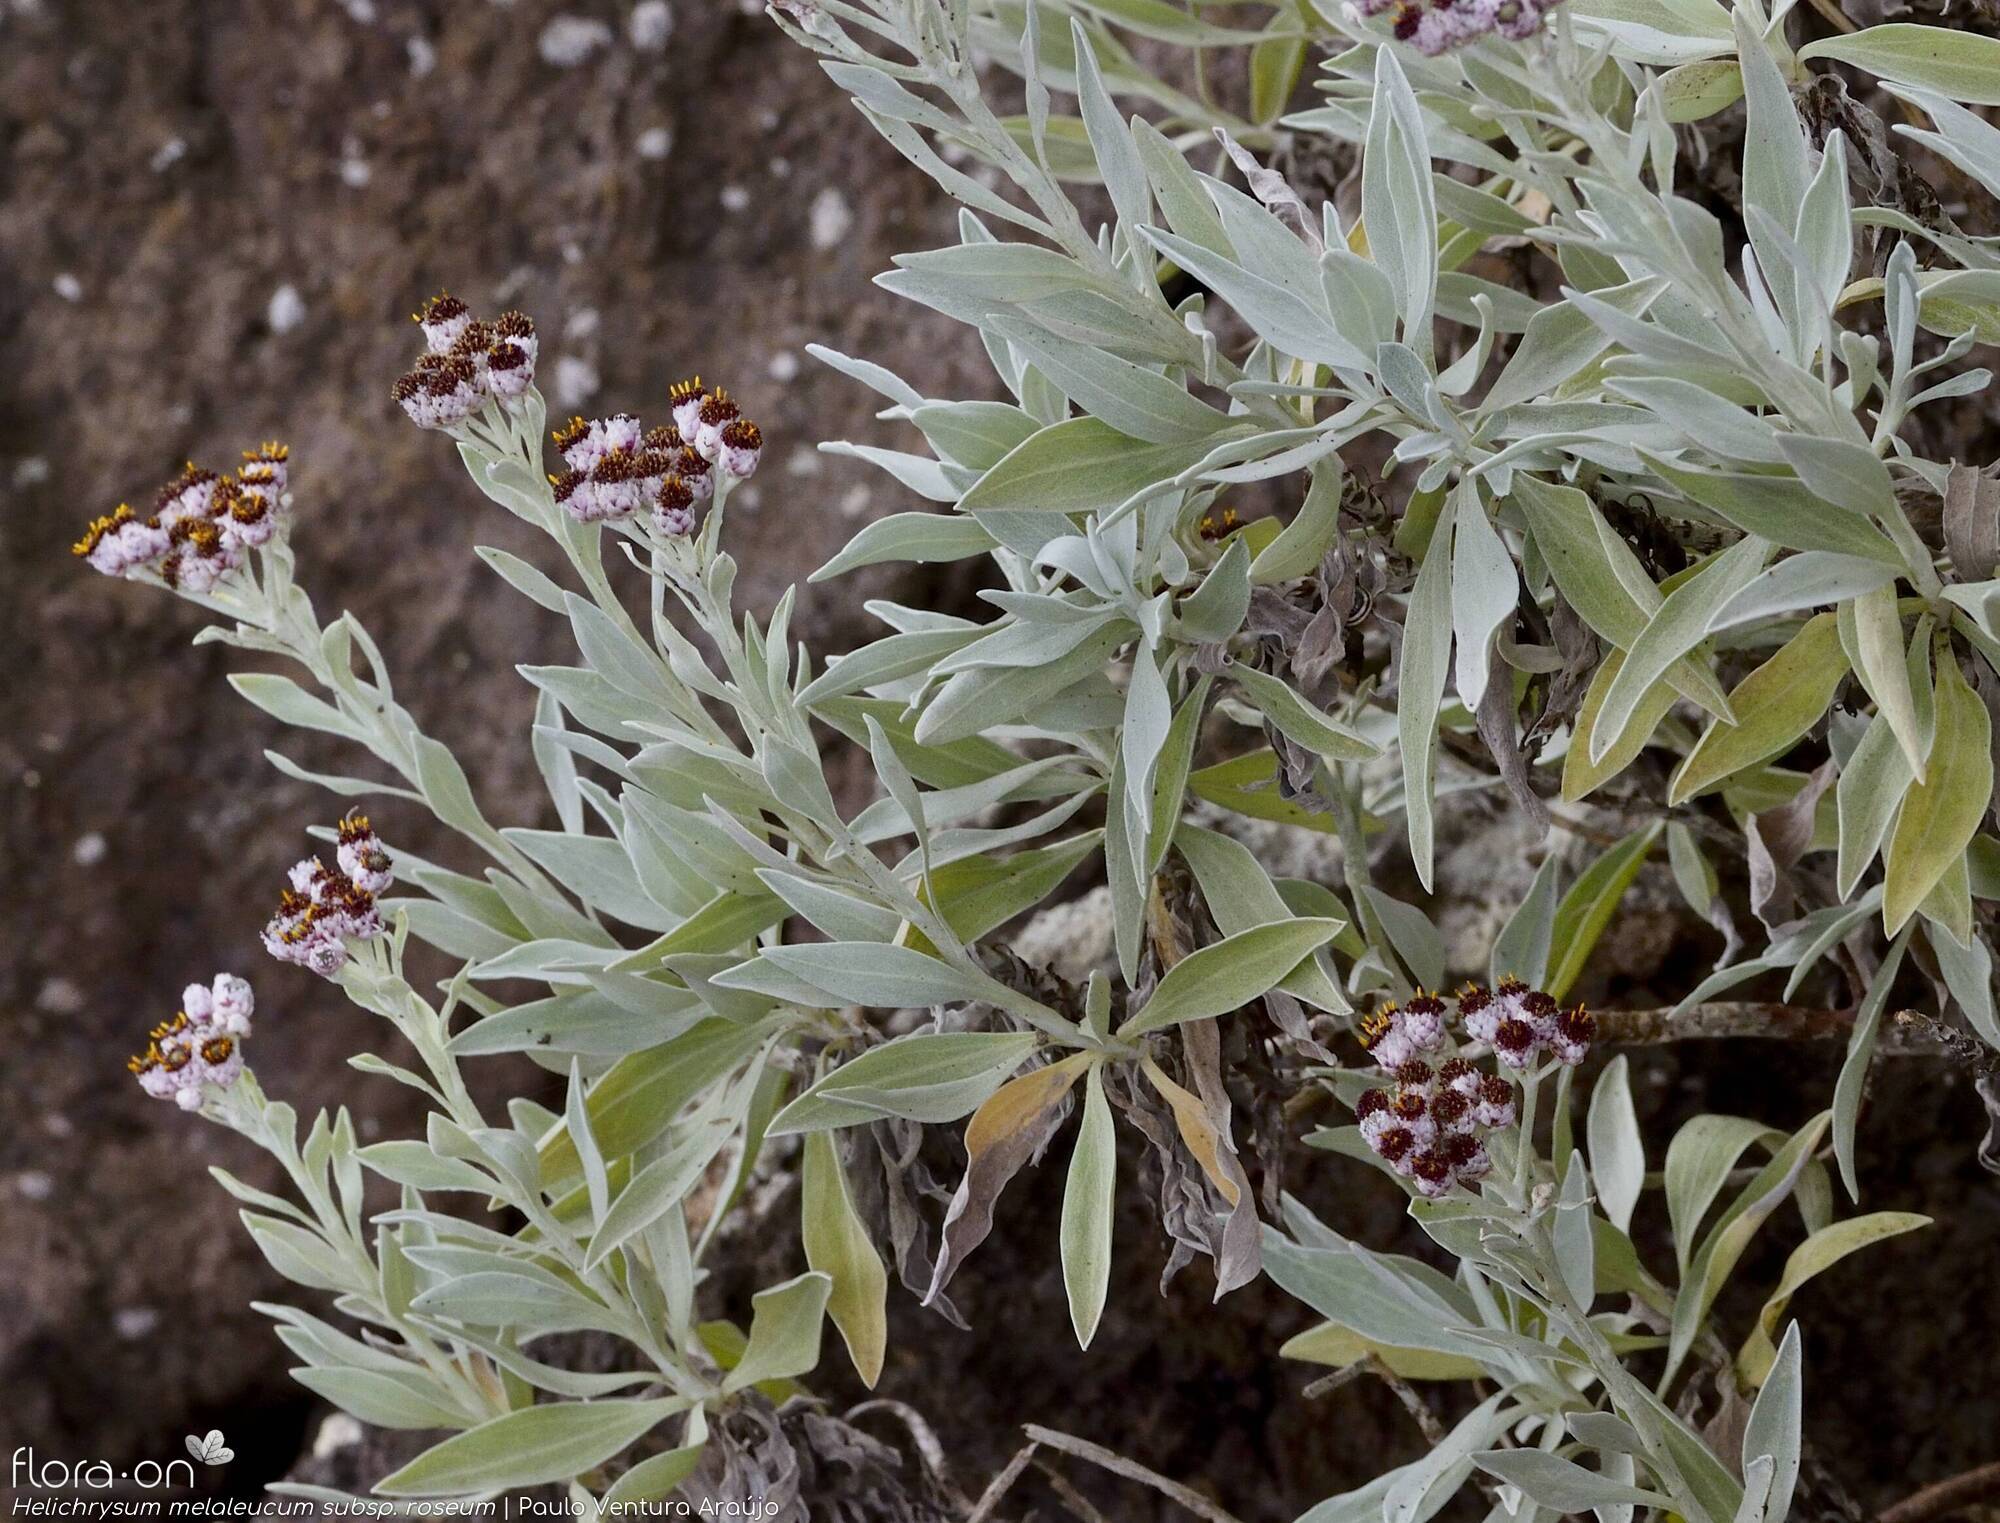 Helichrysum melaleucum - Folha (geral) | Paulo Ventura Araújo; CC BY-NC 4.0